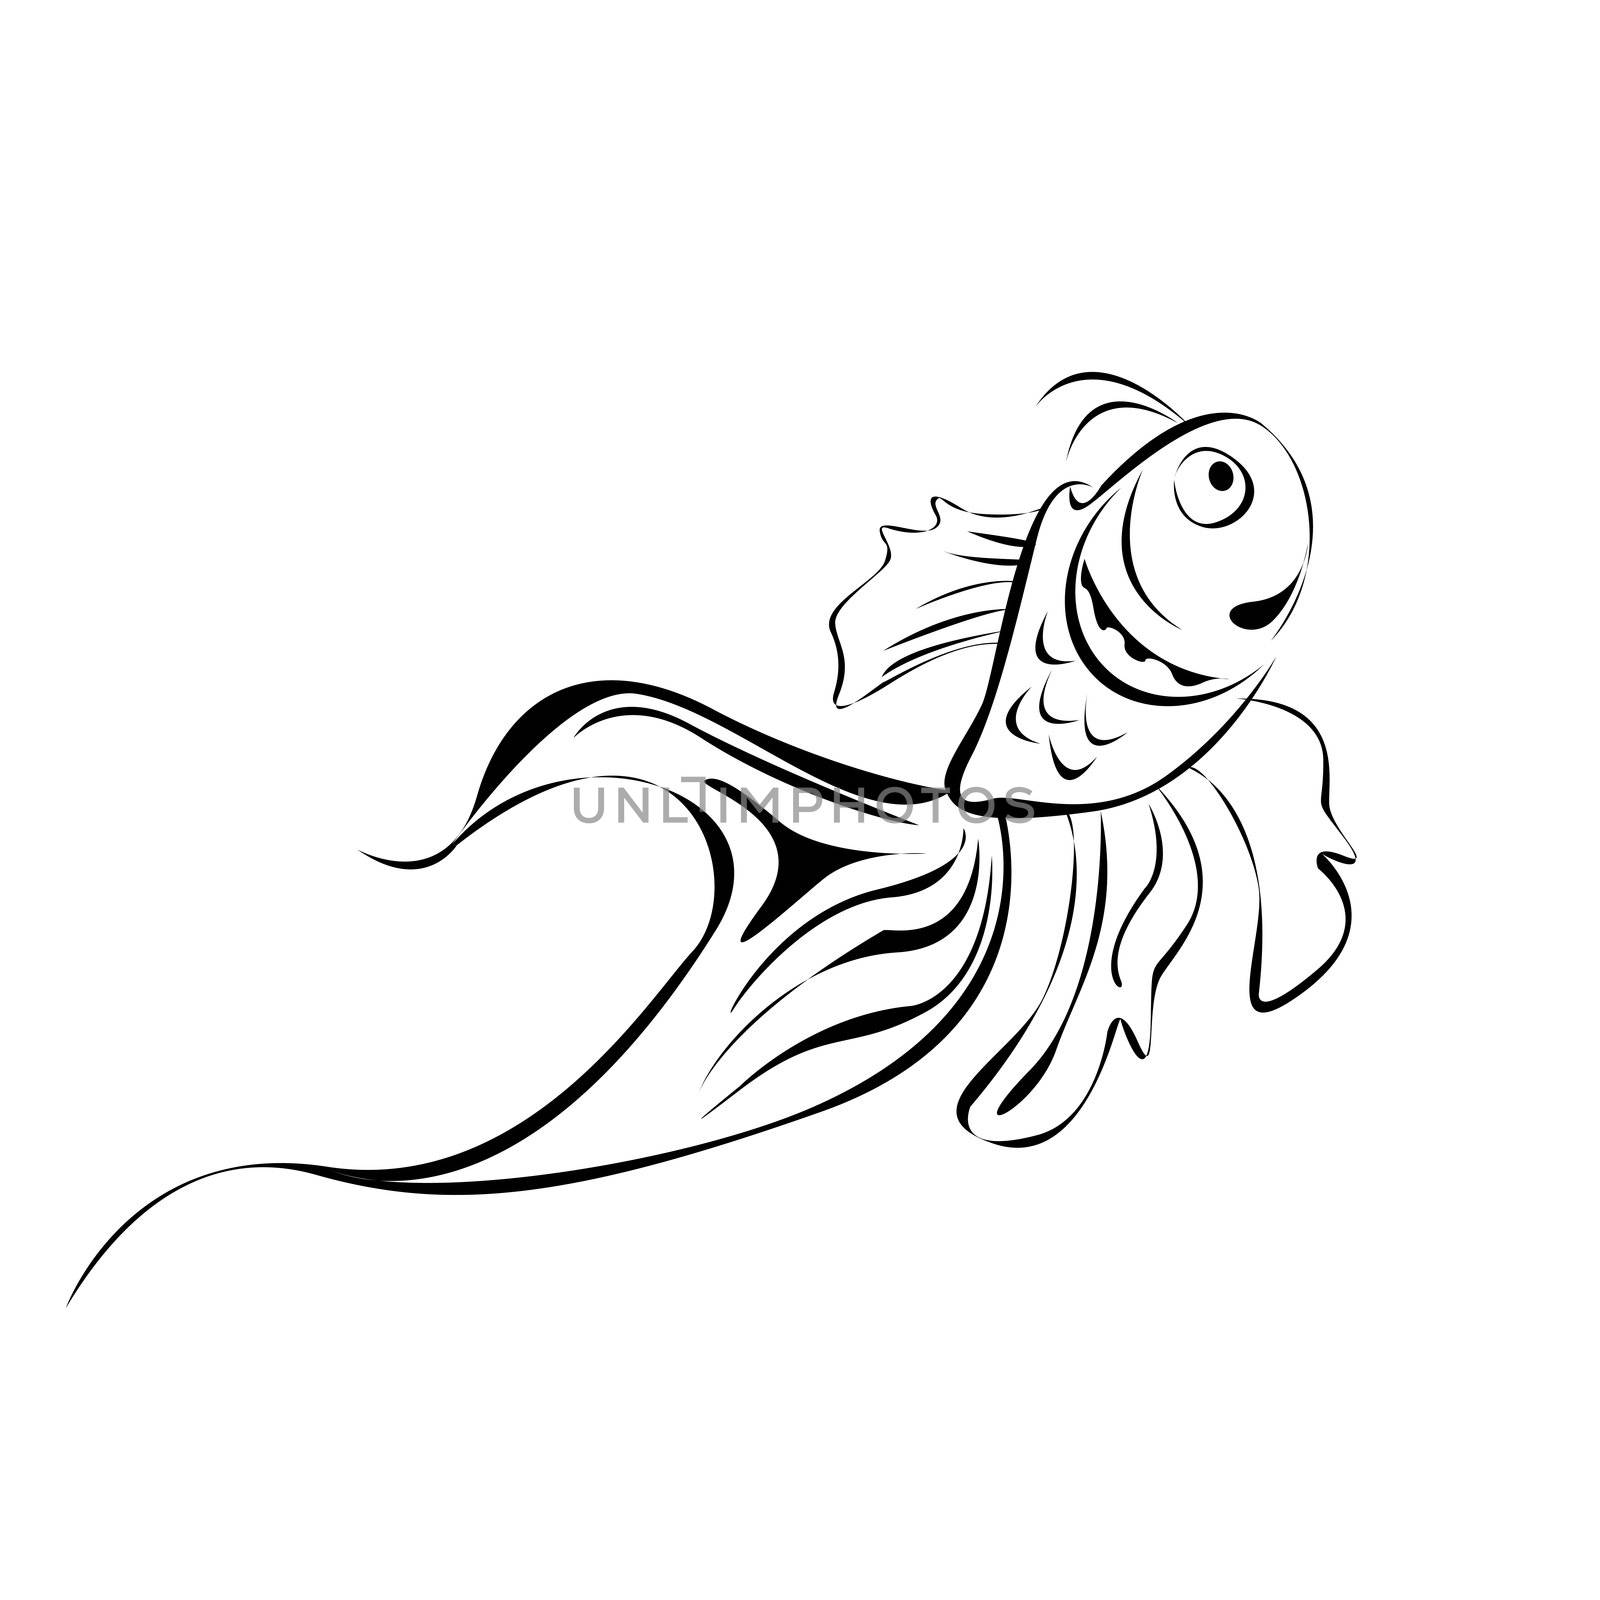 Line art fish by Lirch